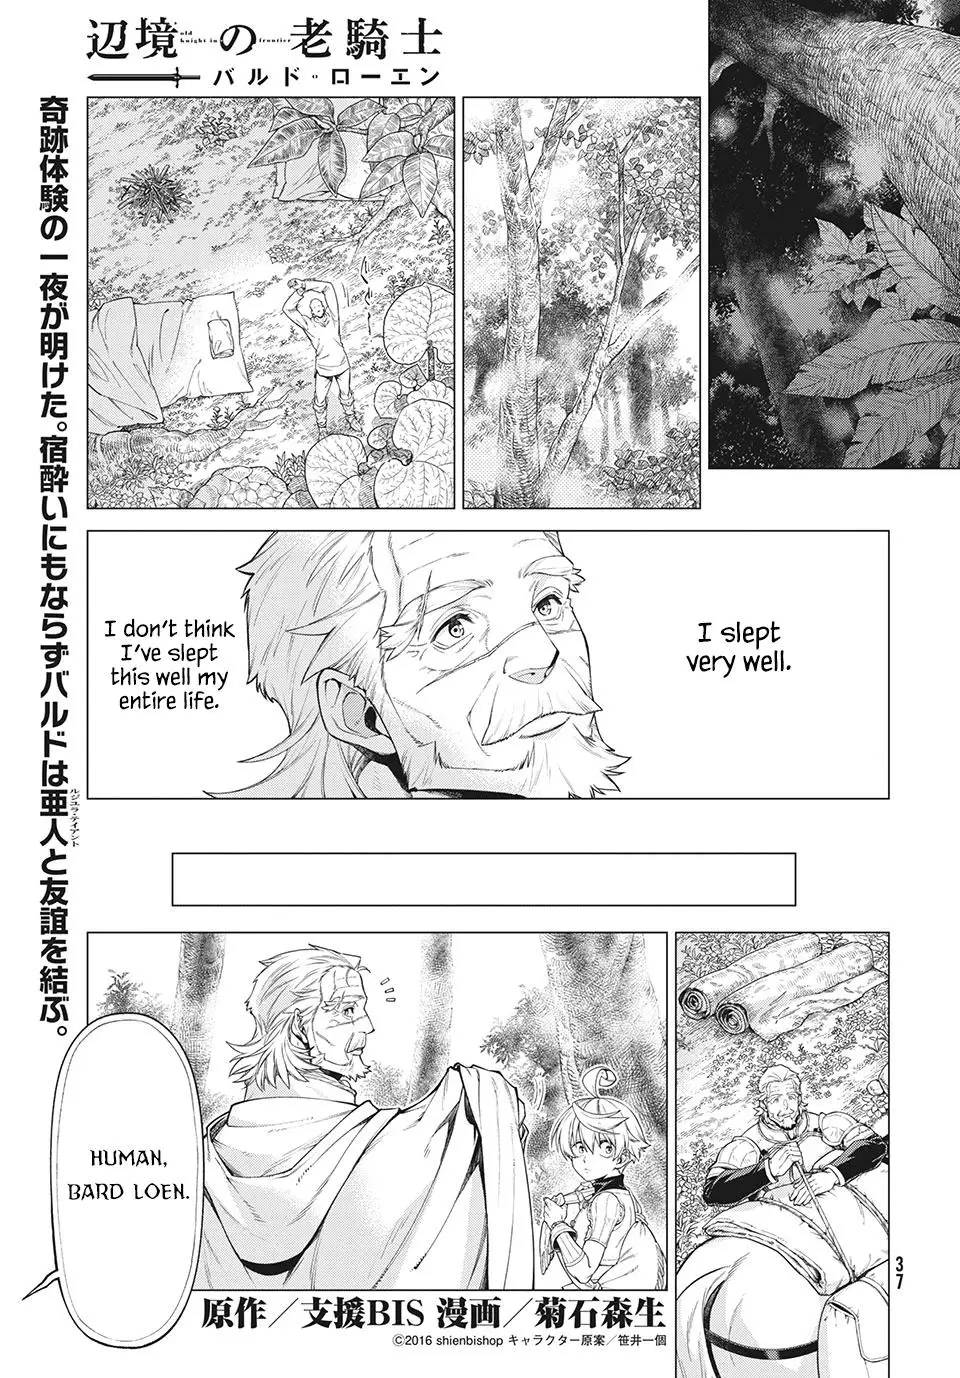 Henkyou No Roukishi - Bard Loen - 40 page 1-b9d27a4e